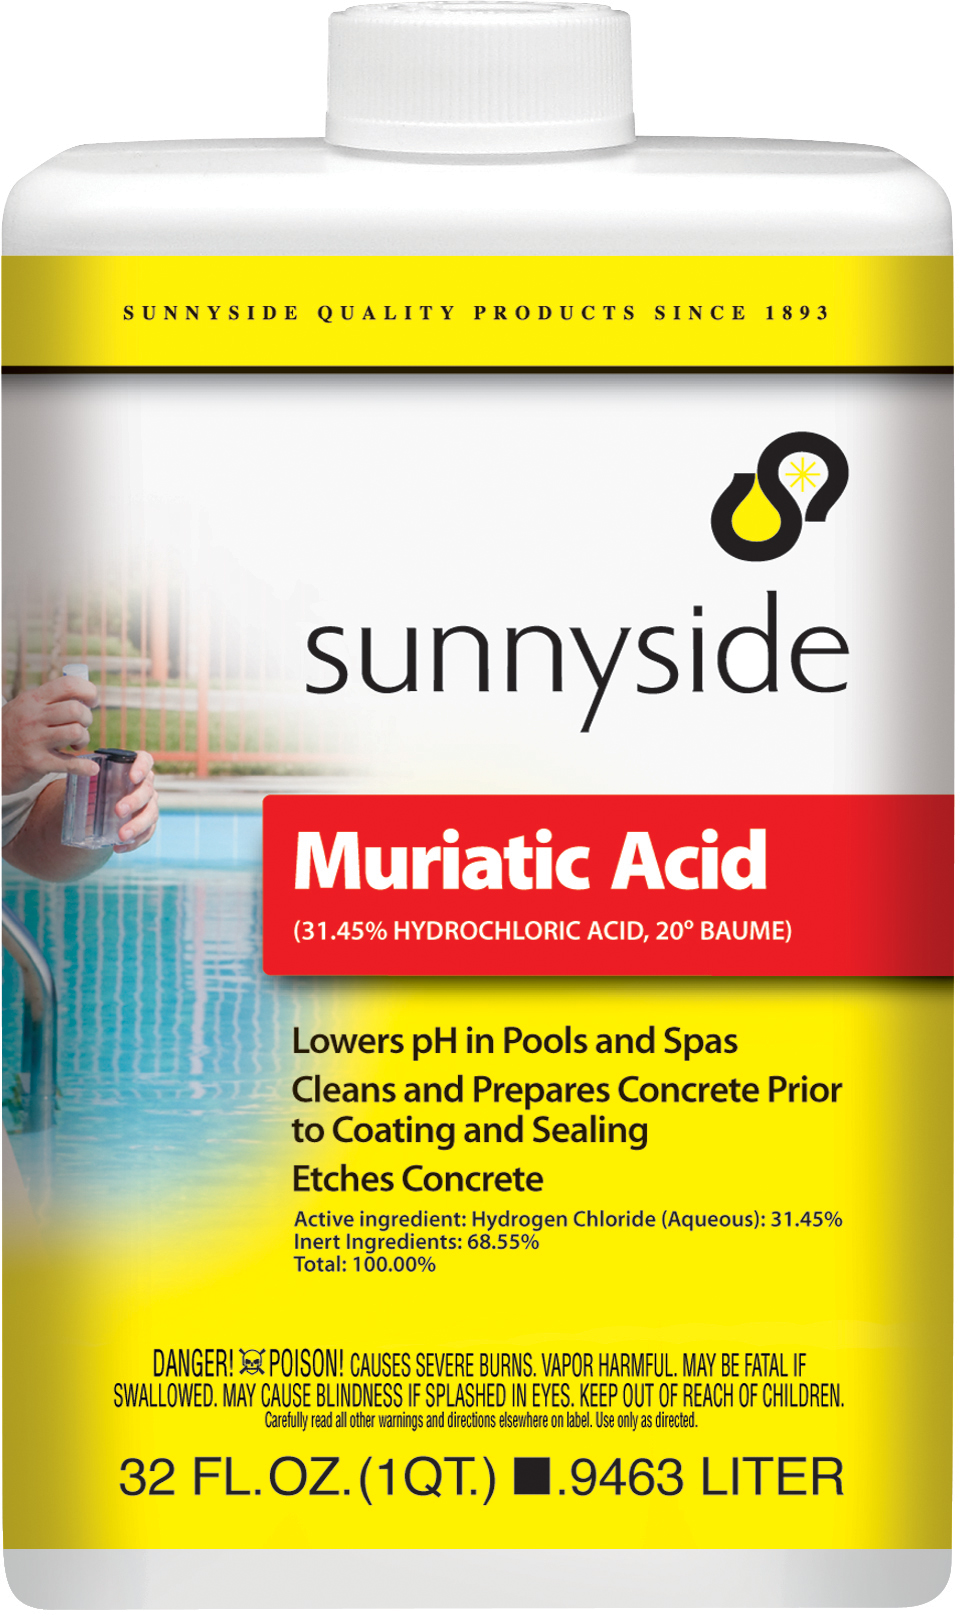 MURIATIC ACID Product Image